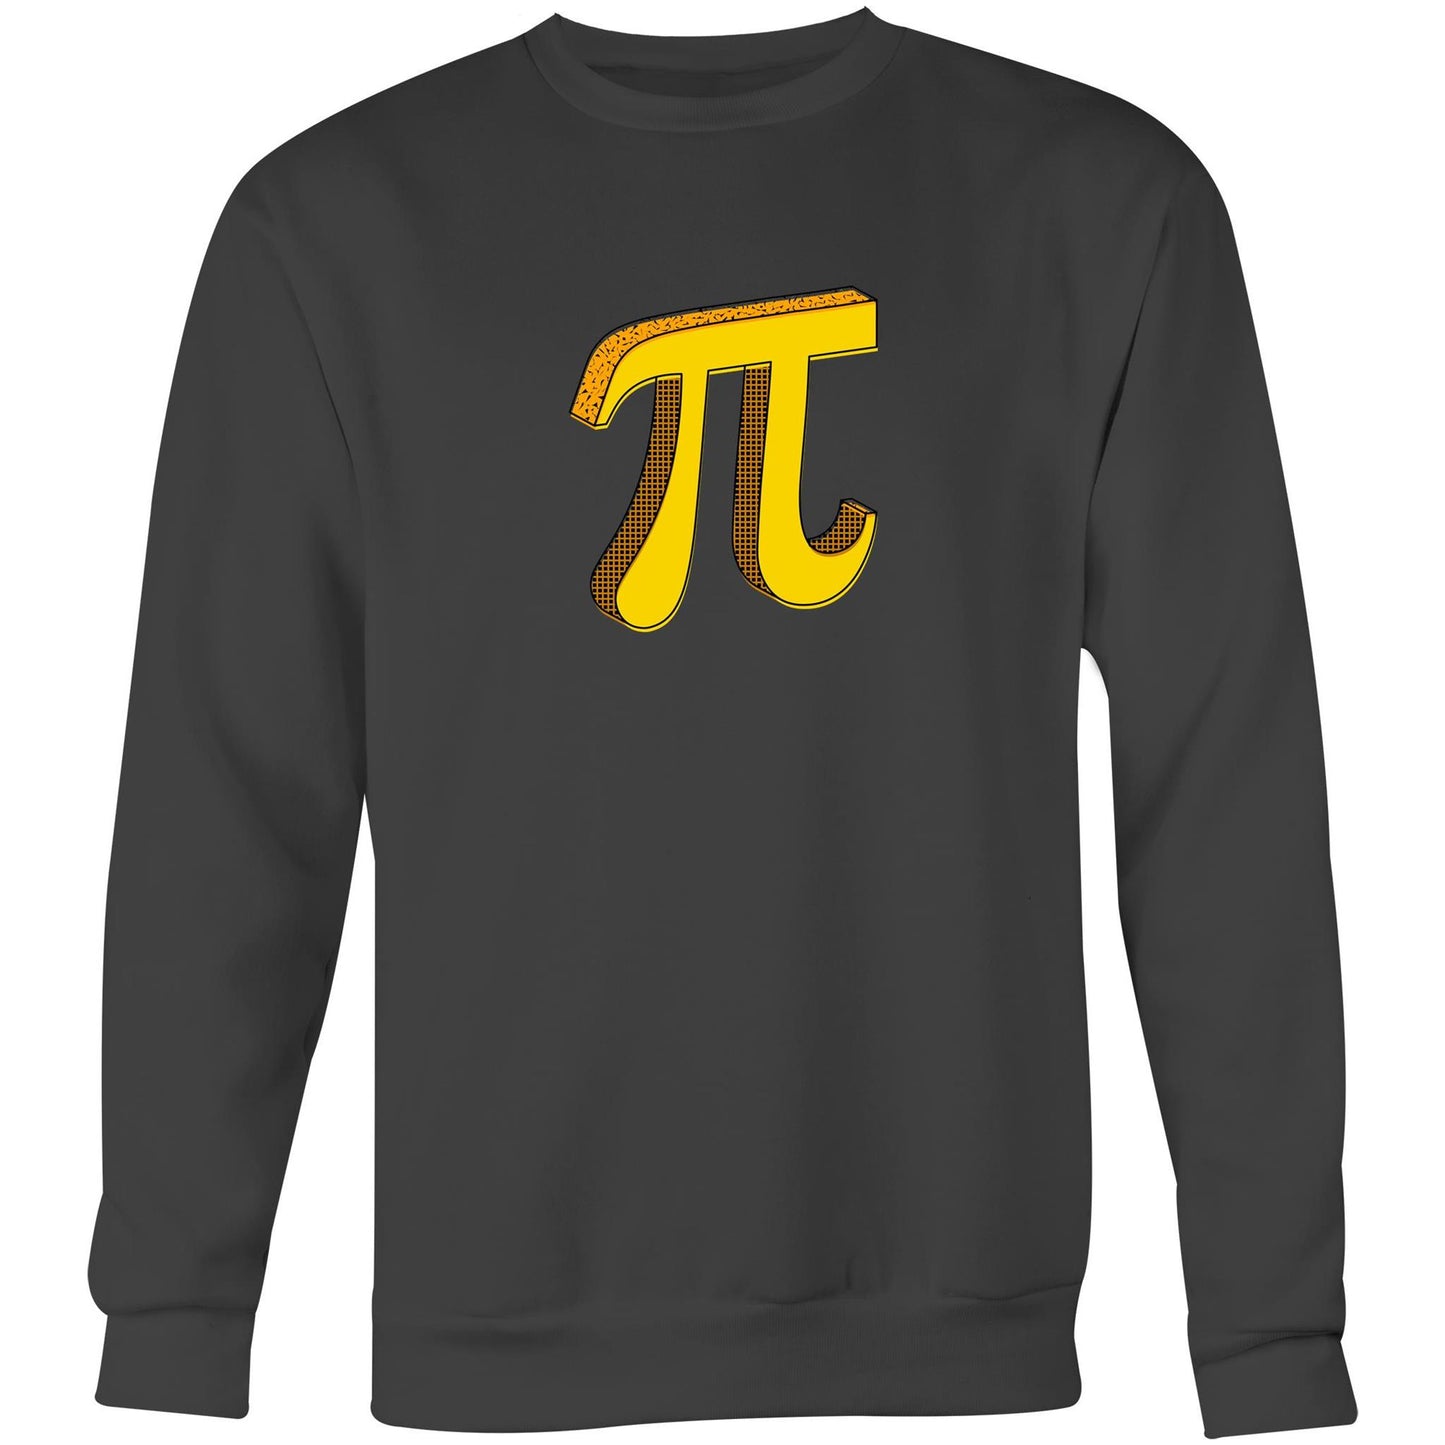 Pi - Crew Sweatshirt Coal Sweatshirt Maths Science